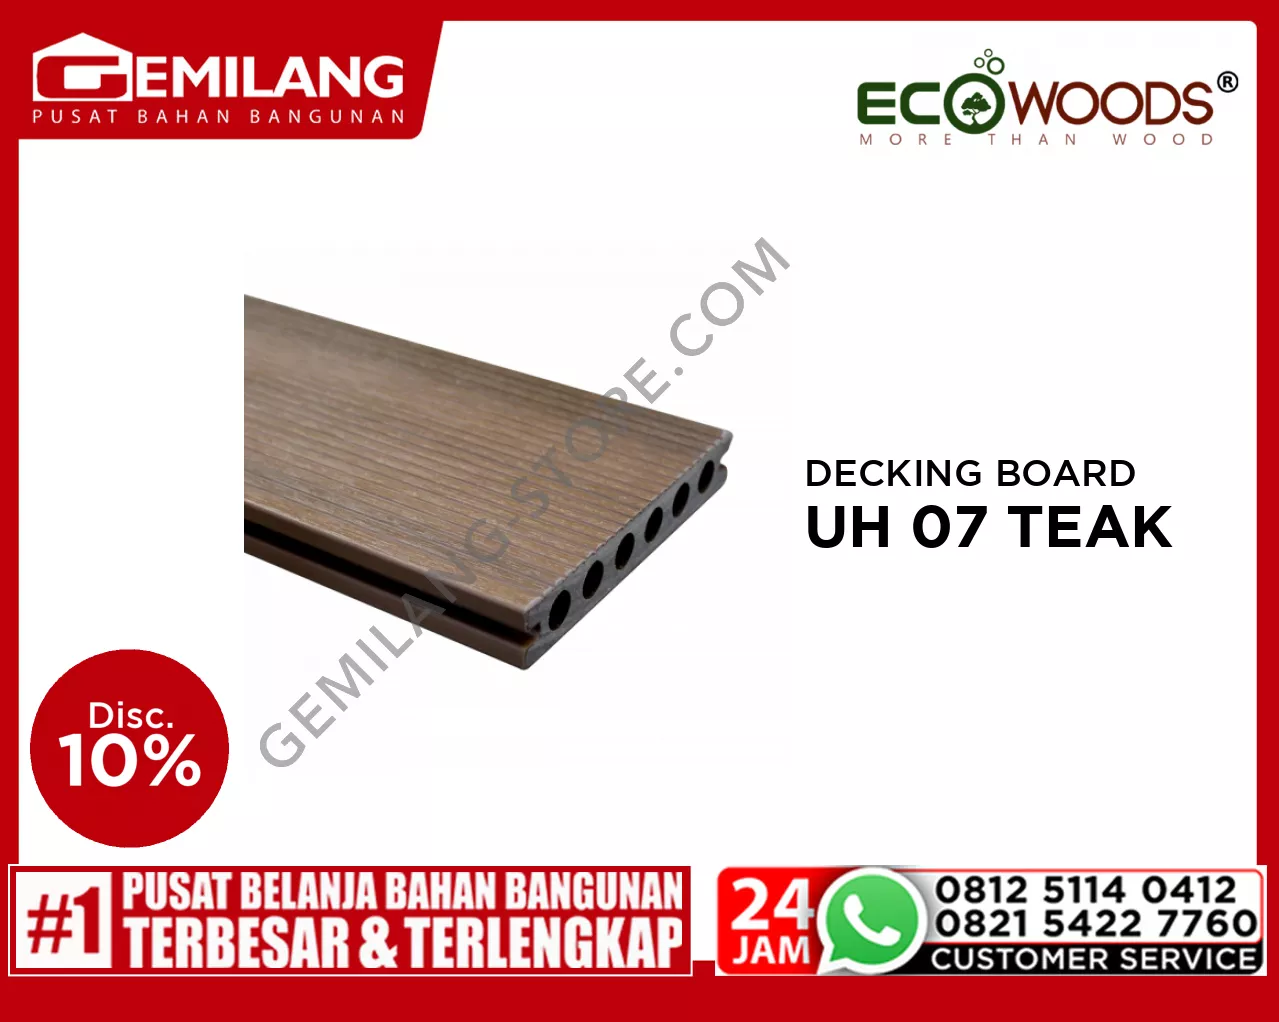 ECOWOOD DECKING BOARD UH 07 TEAK ( 138 x 22.5 x 2200mm)